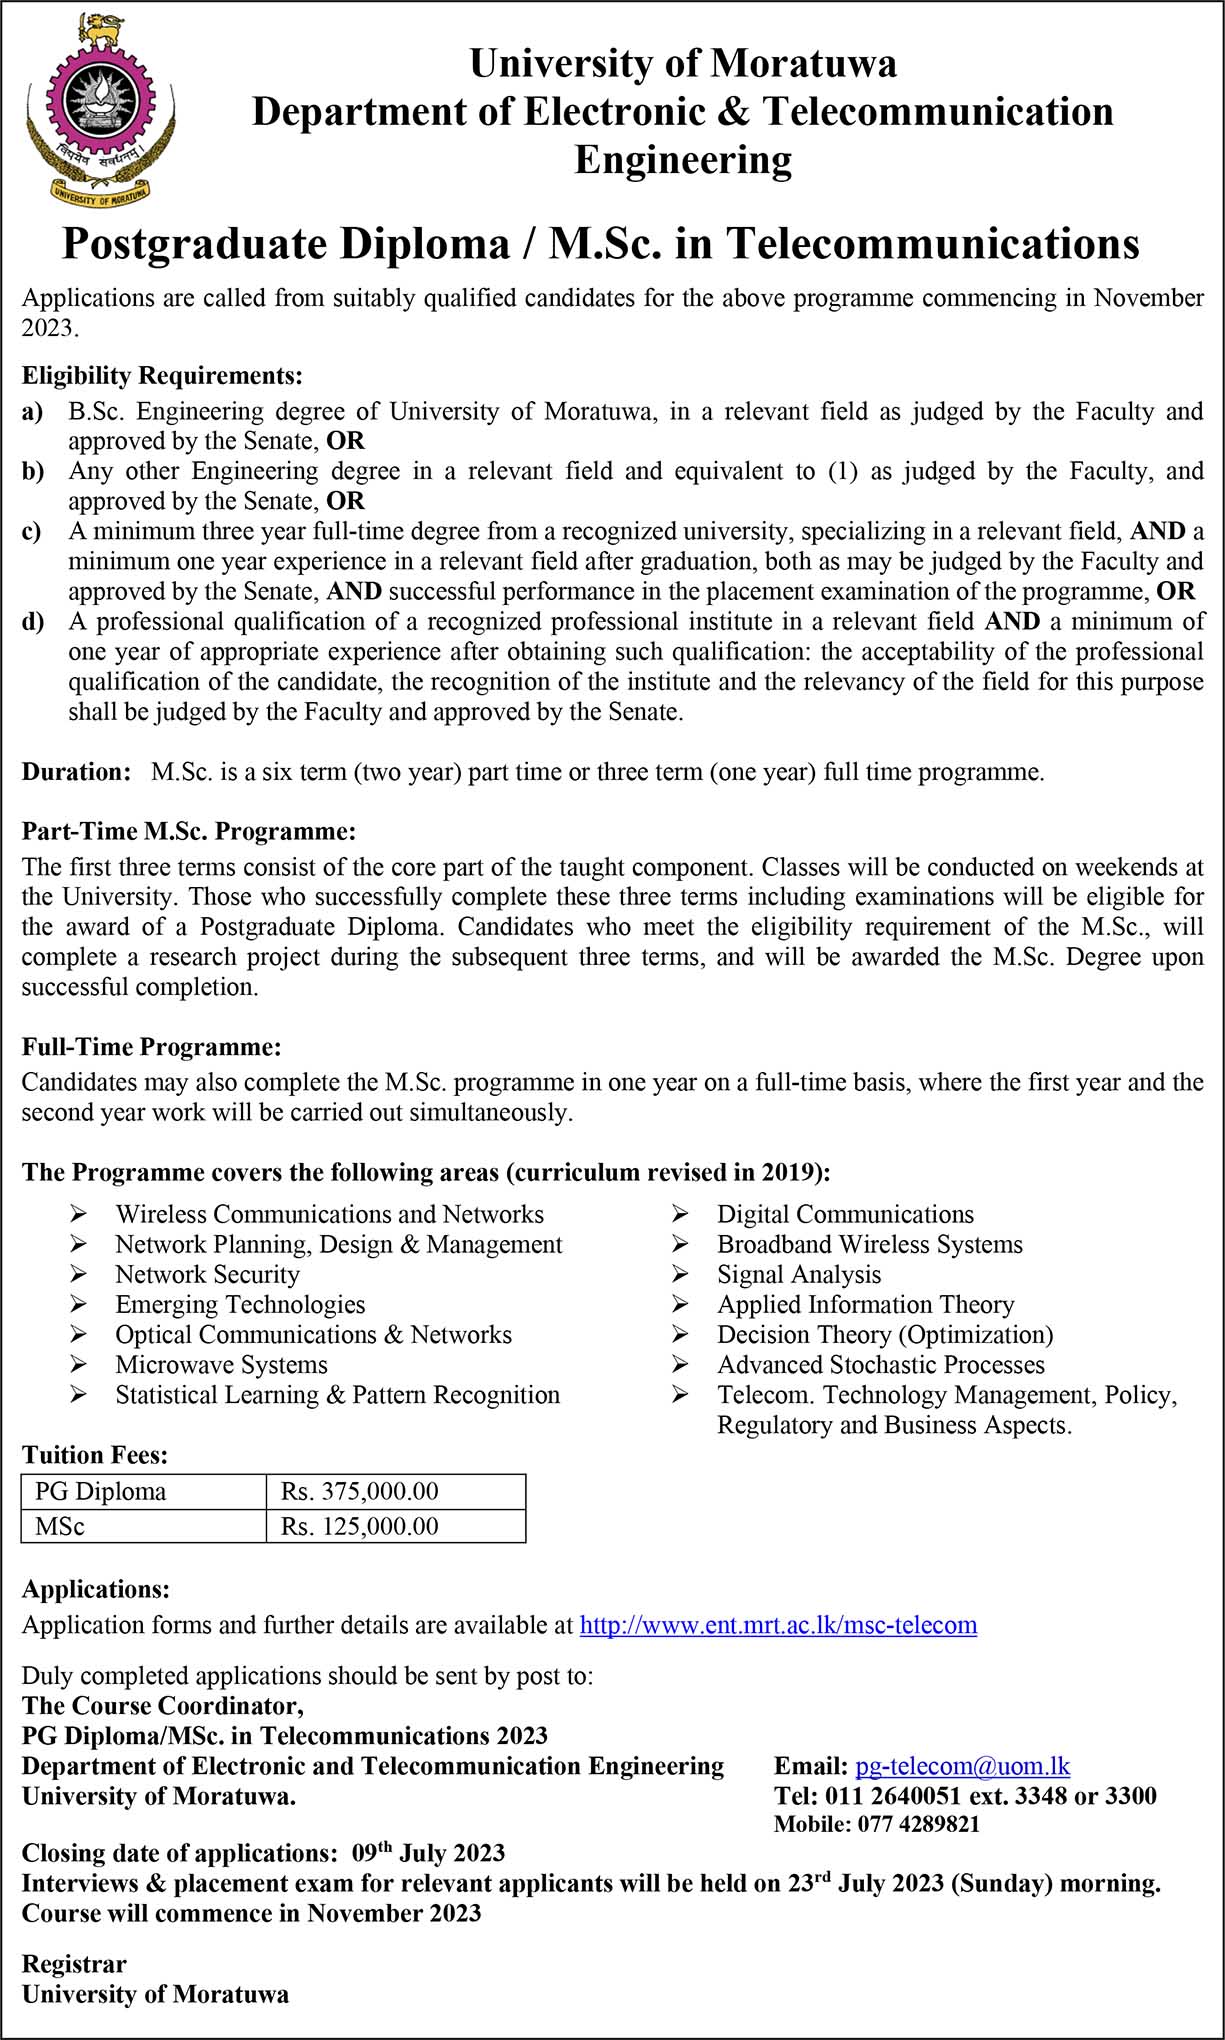 PG Diploma / MSc in Telecommunications 2023 - University of Moratuwa